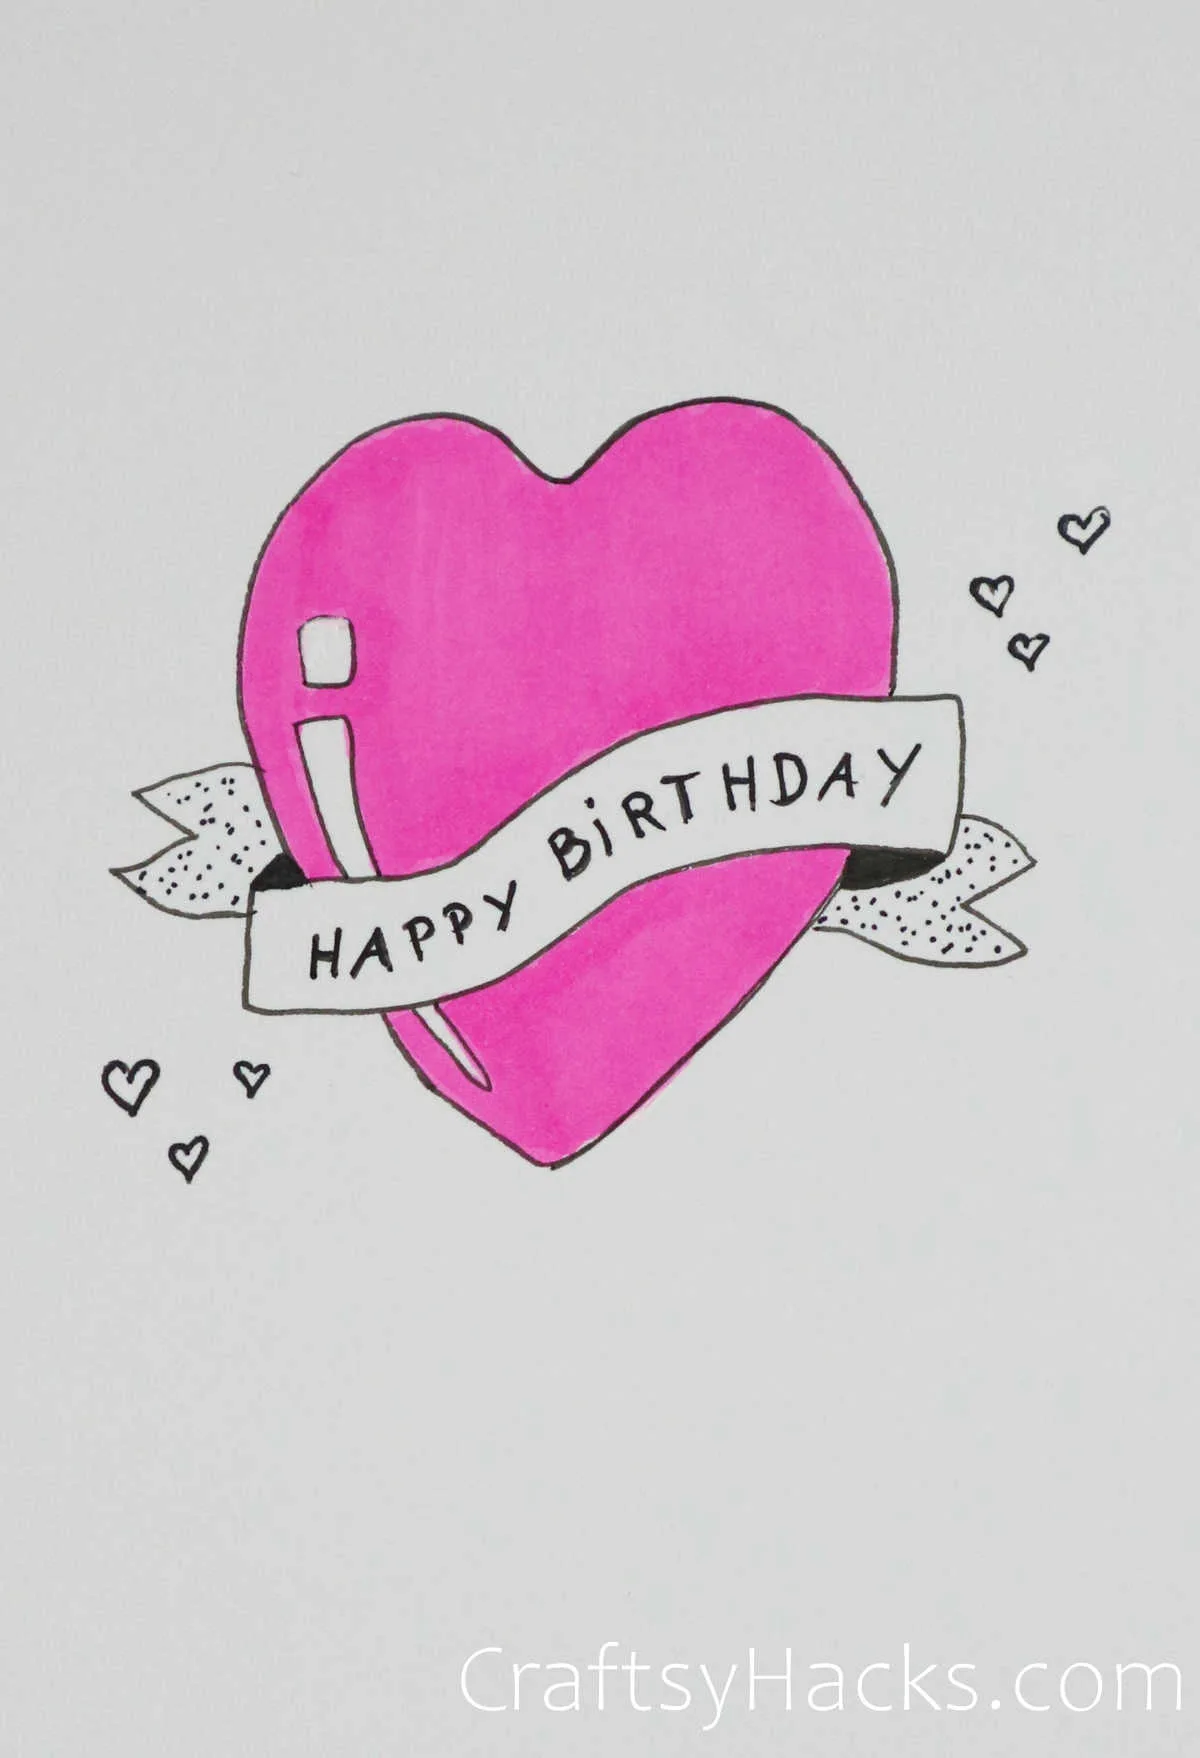 heartfelt happy birthday doodle